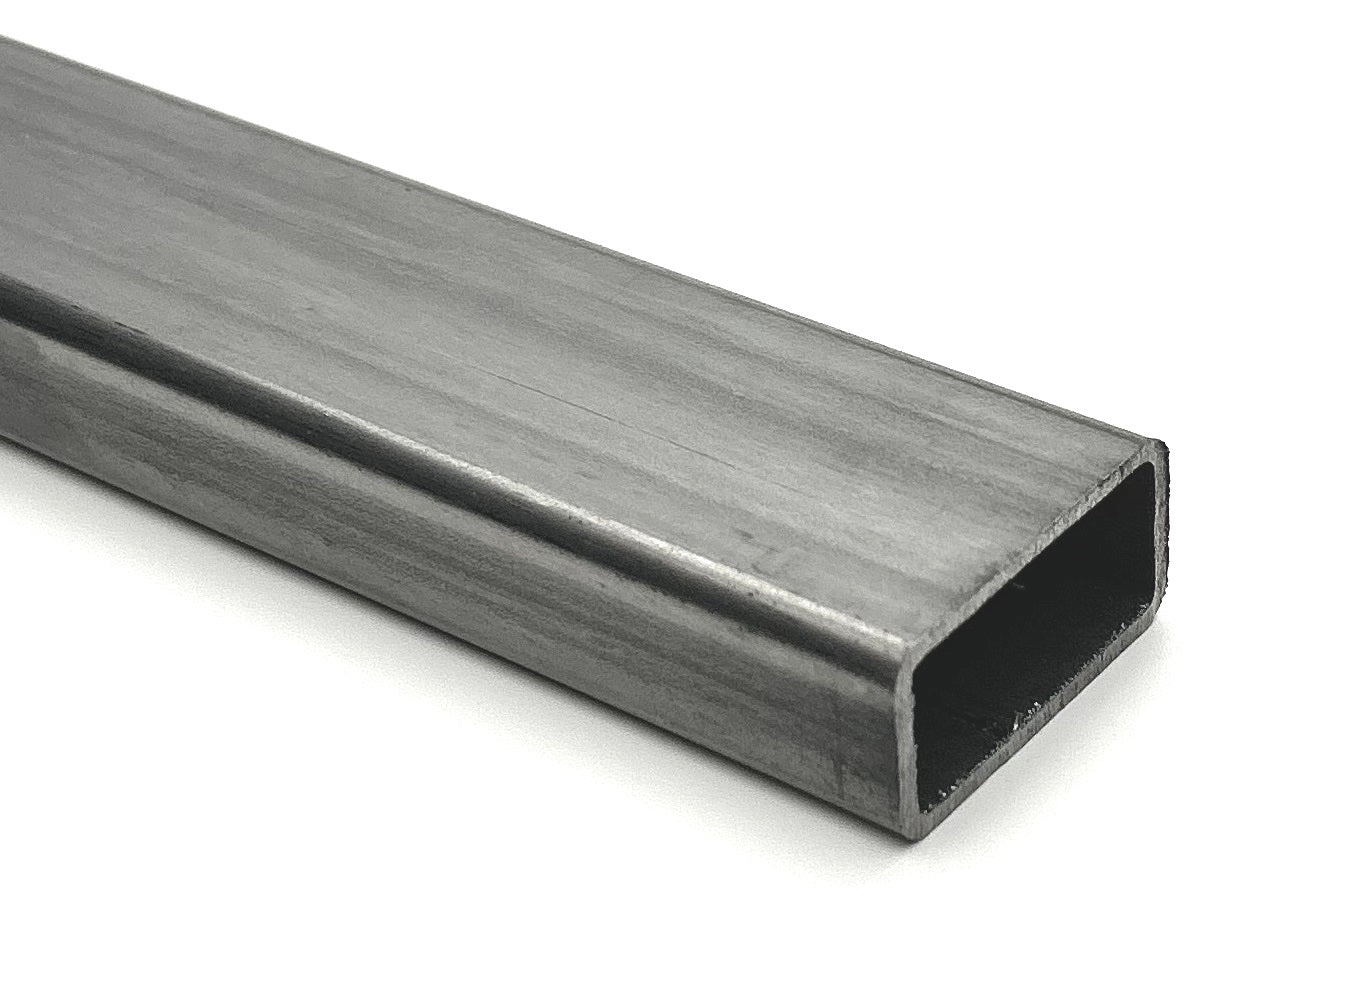 Sort stål - Rektangulært rør 60x30mm